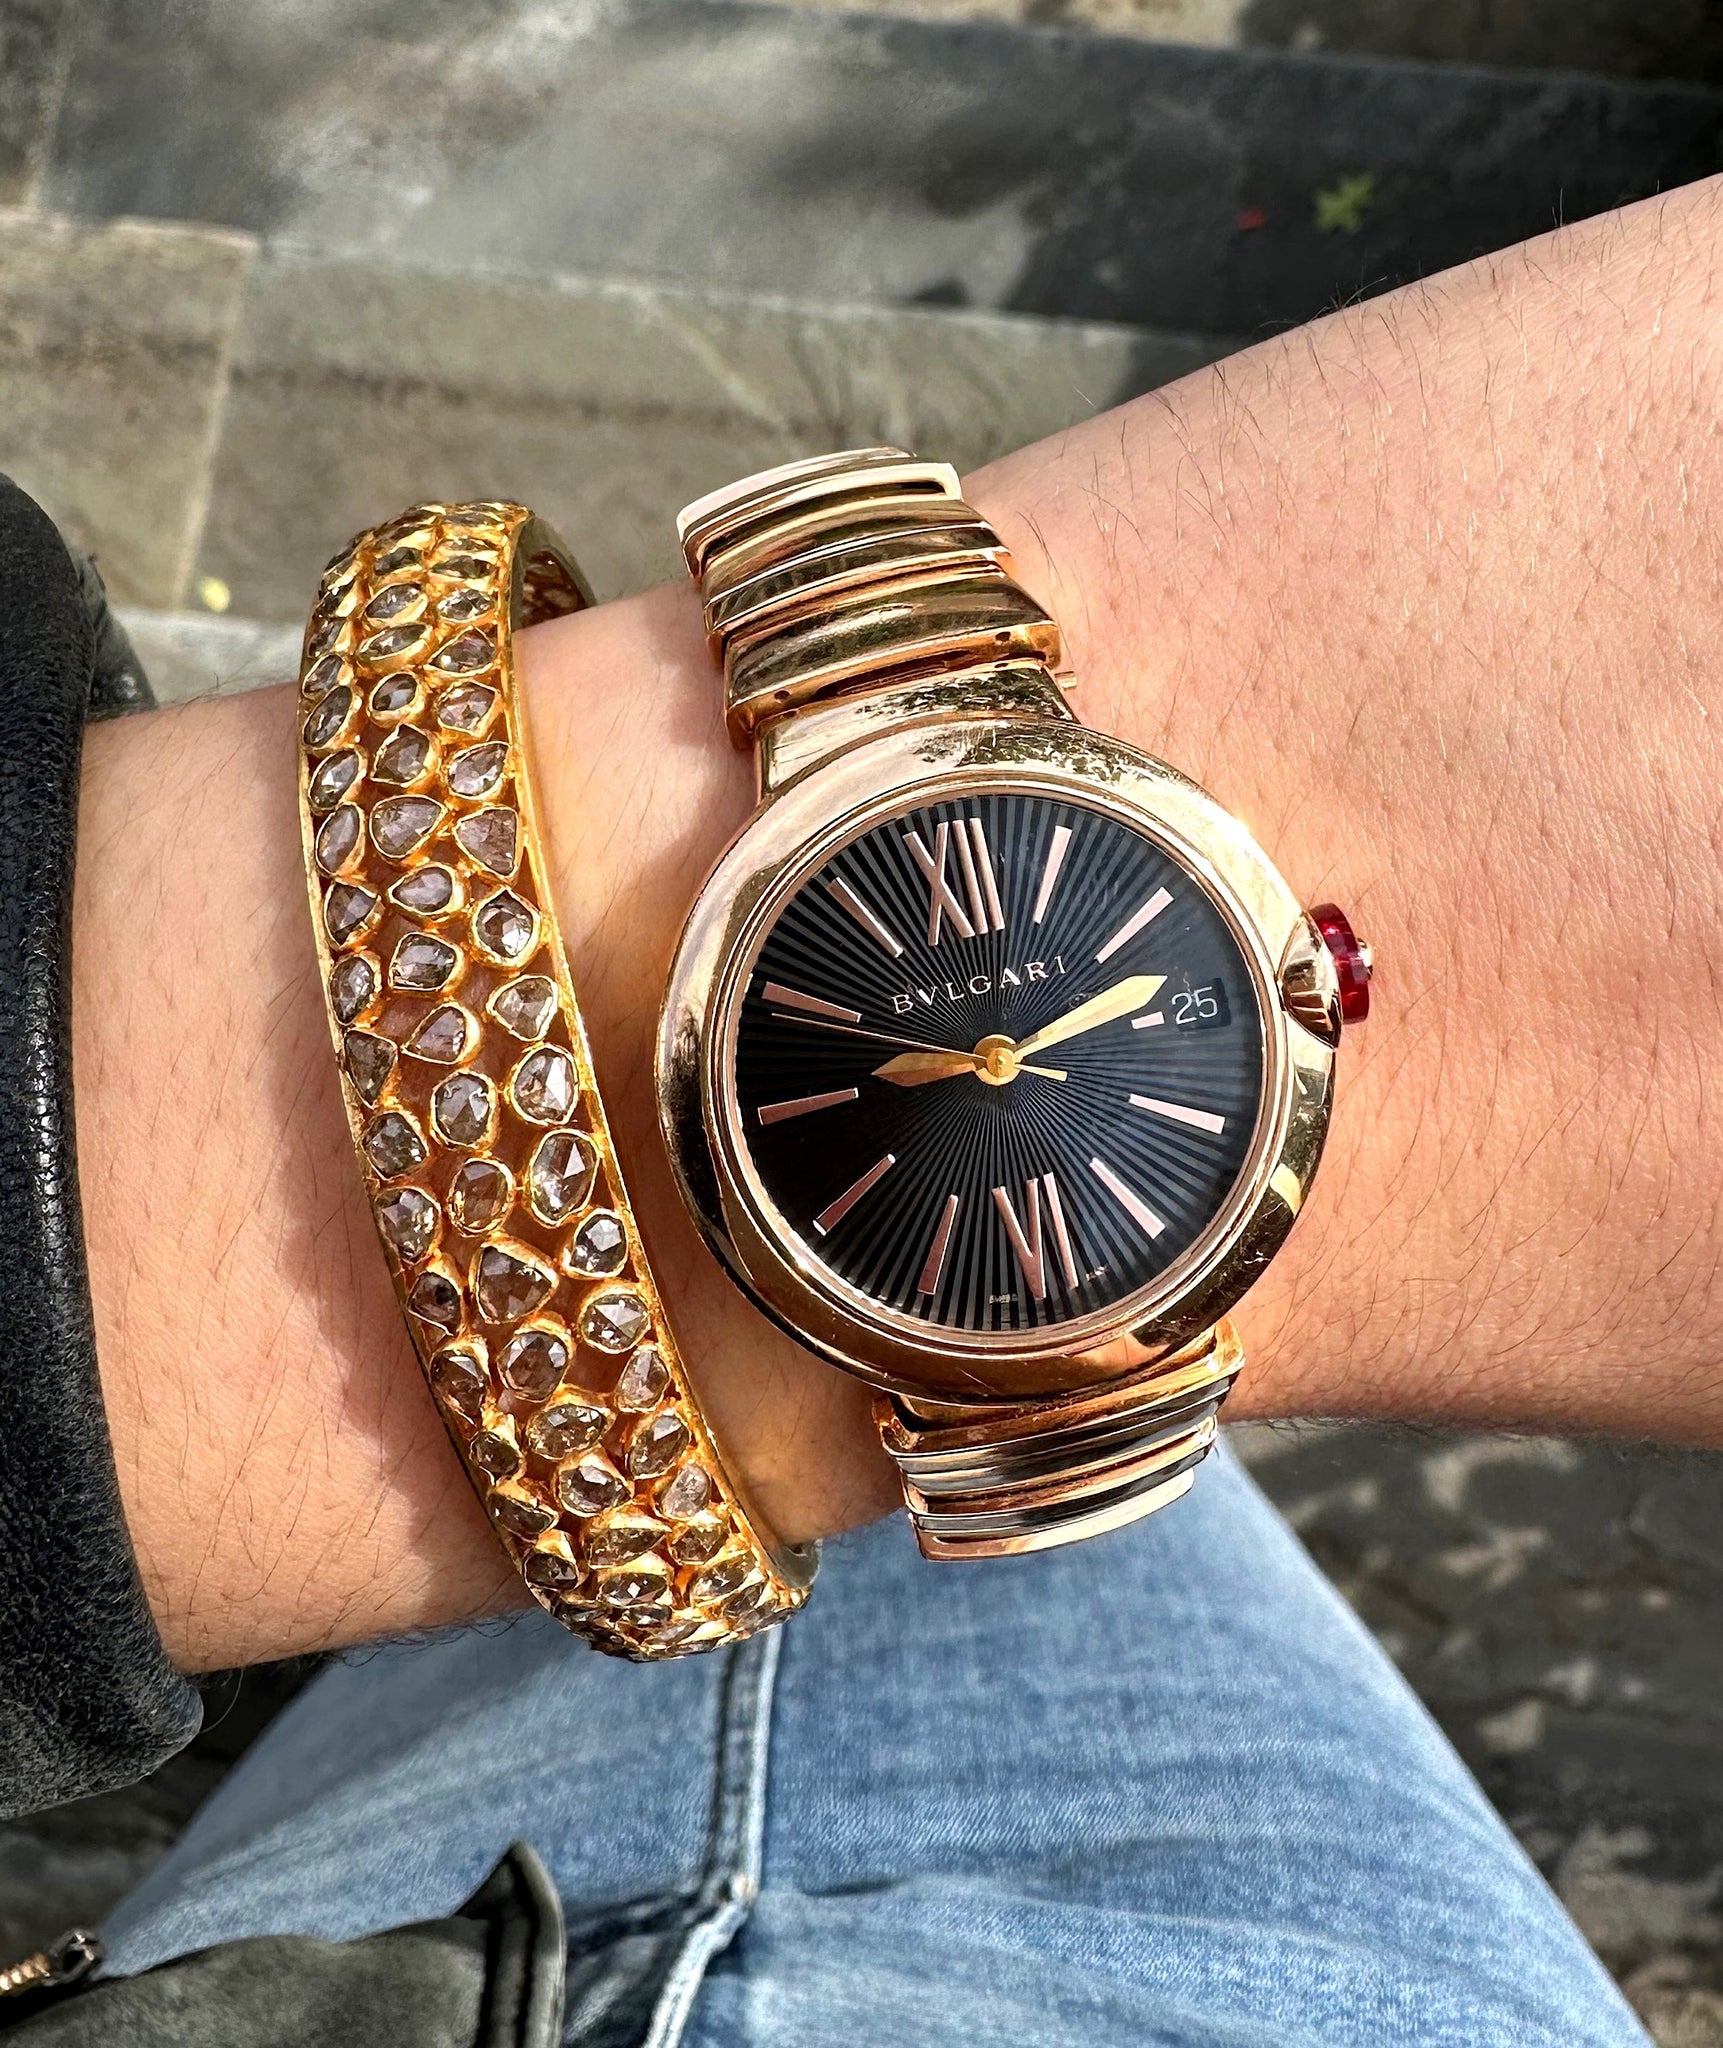 Bulgari Lucea 18kt Rose Gold Watch